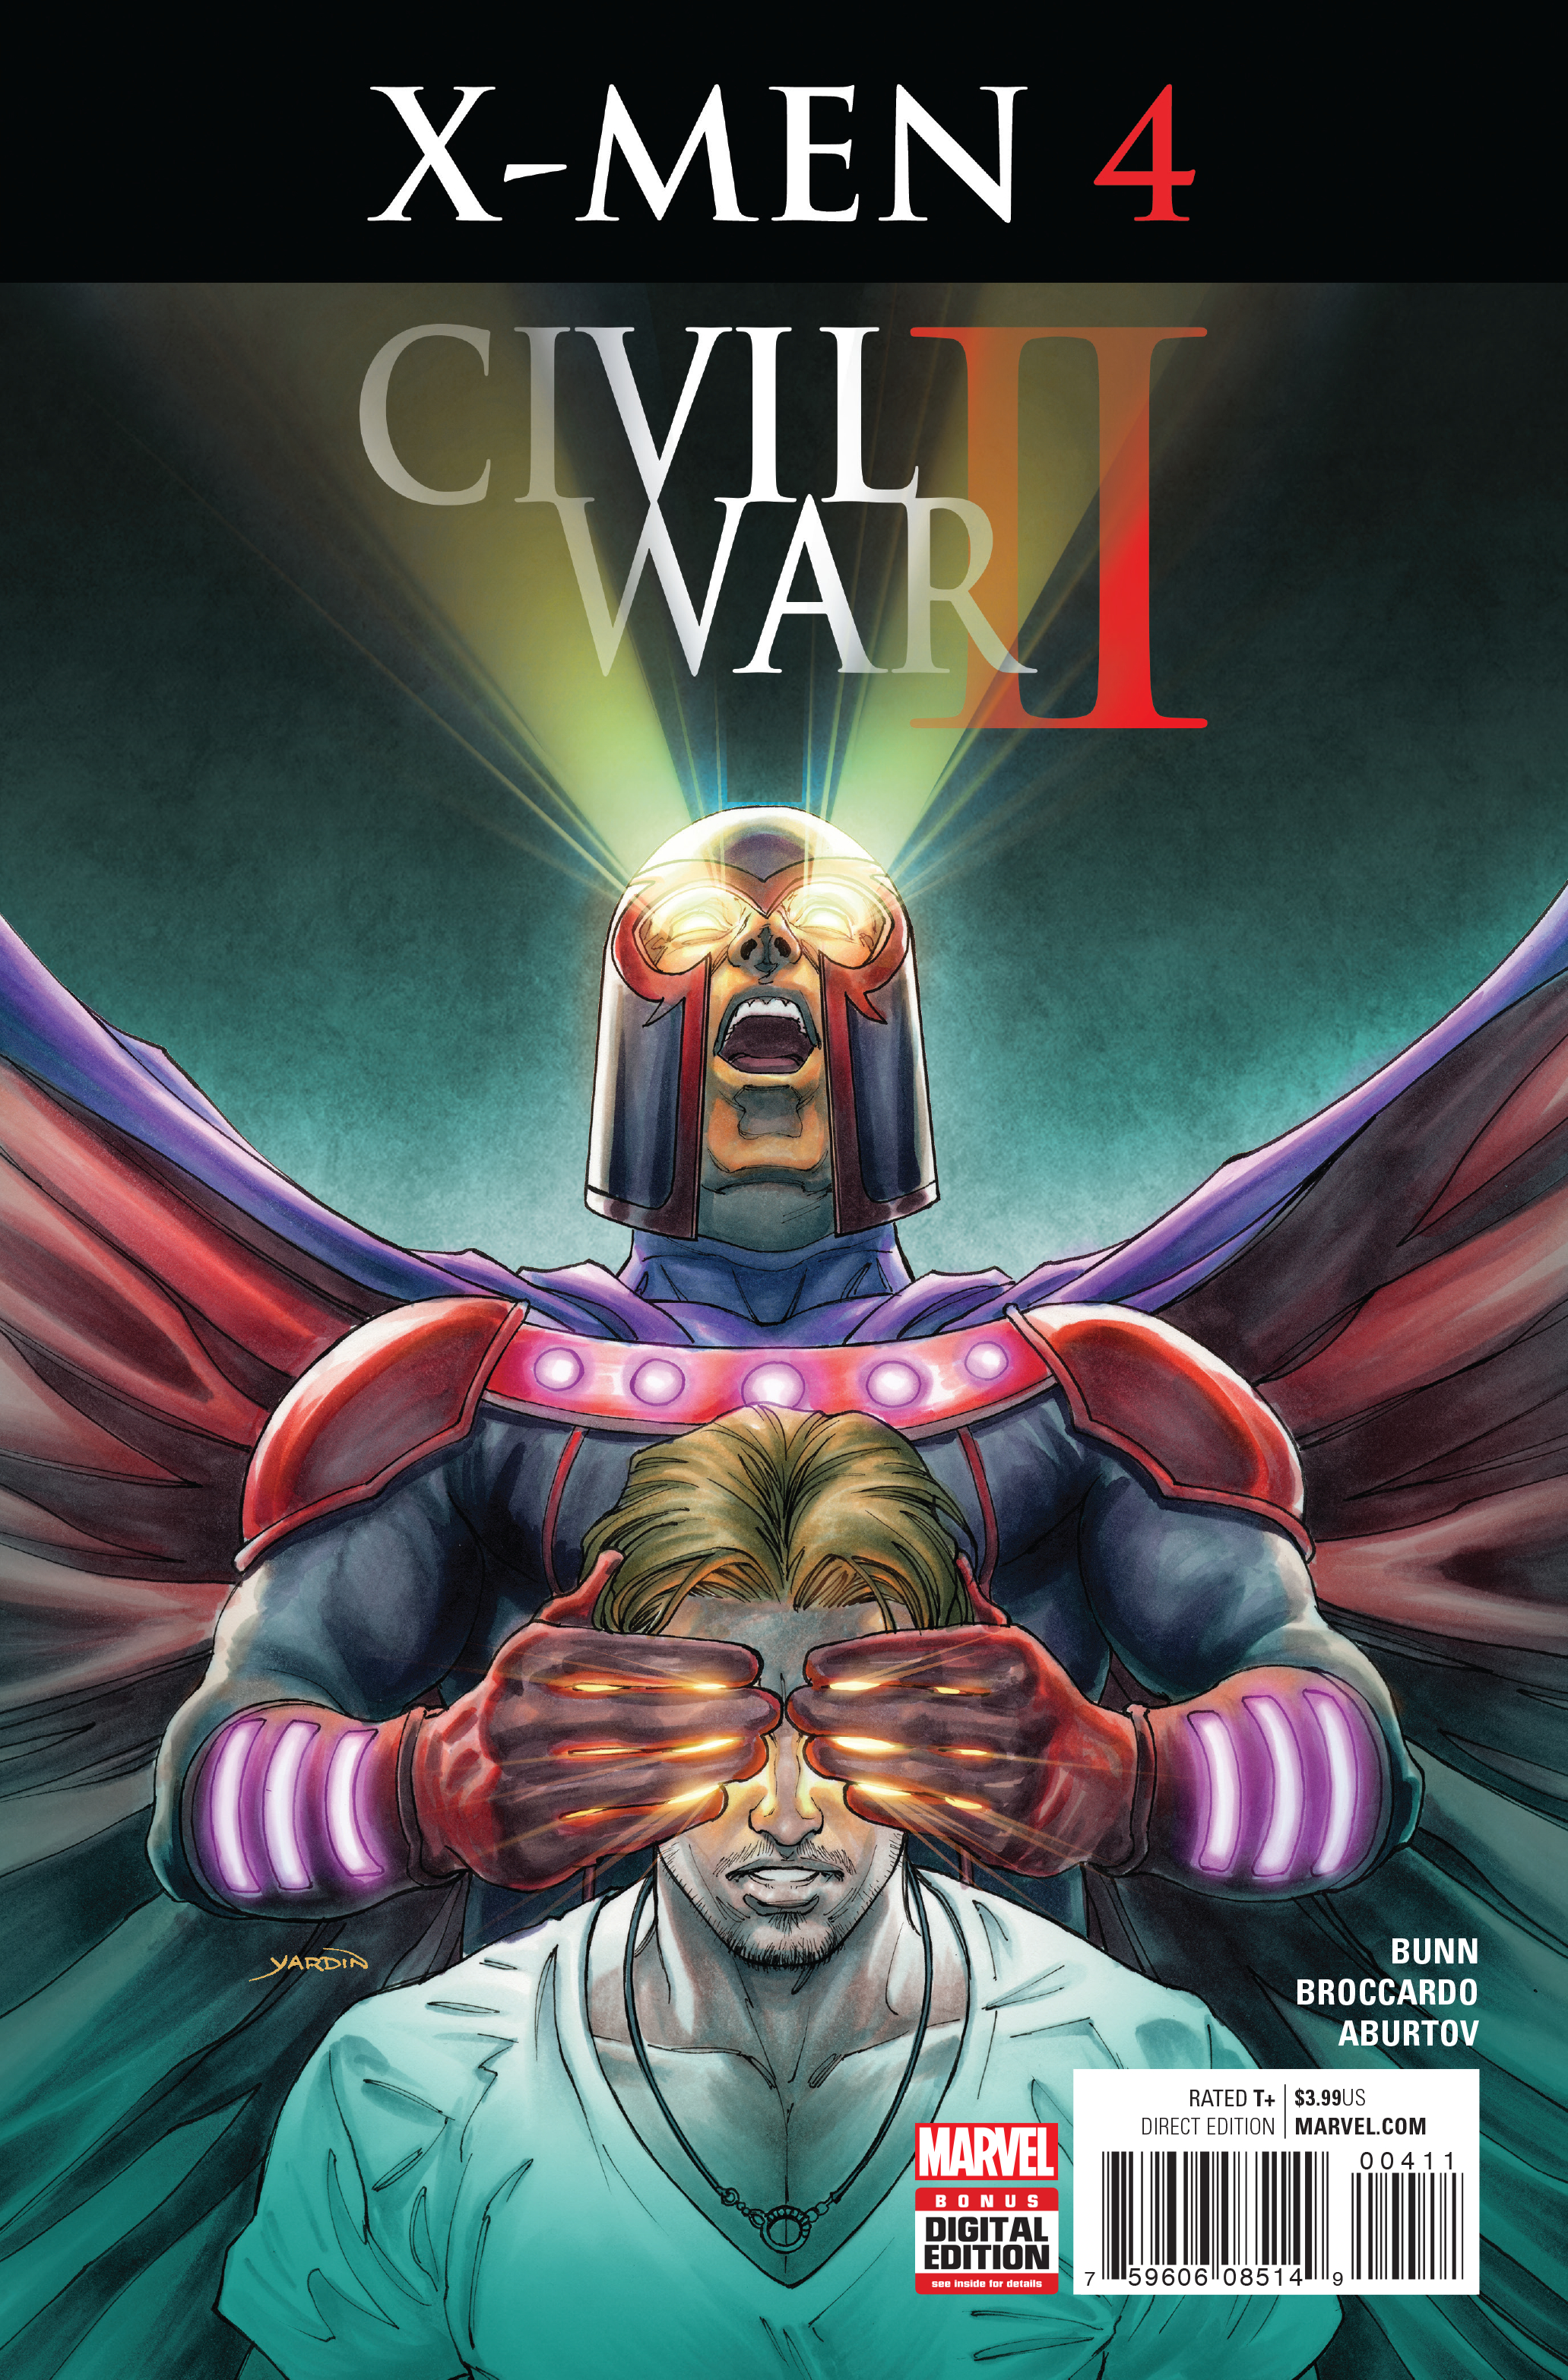 CIVIL WAR II X-MEN #4 (OF 4)